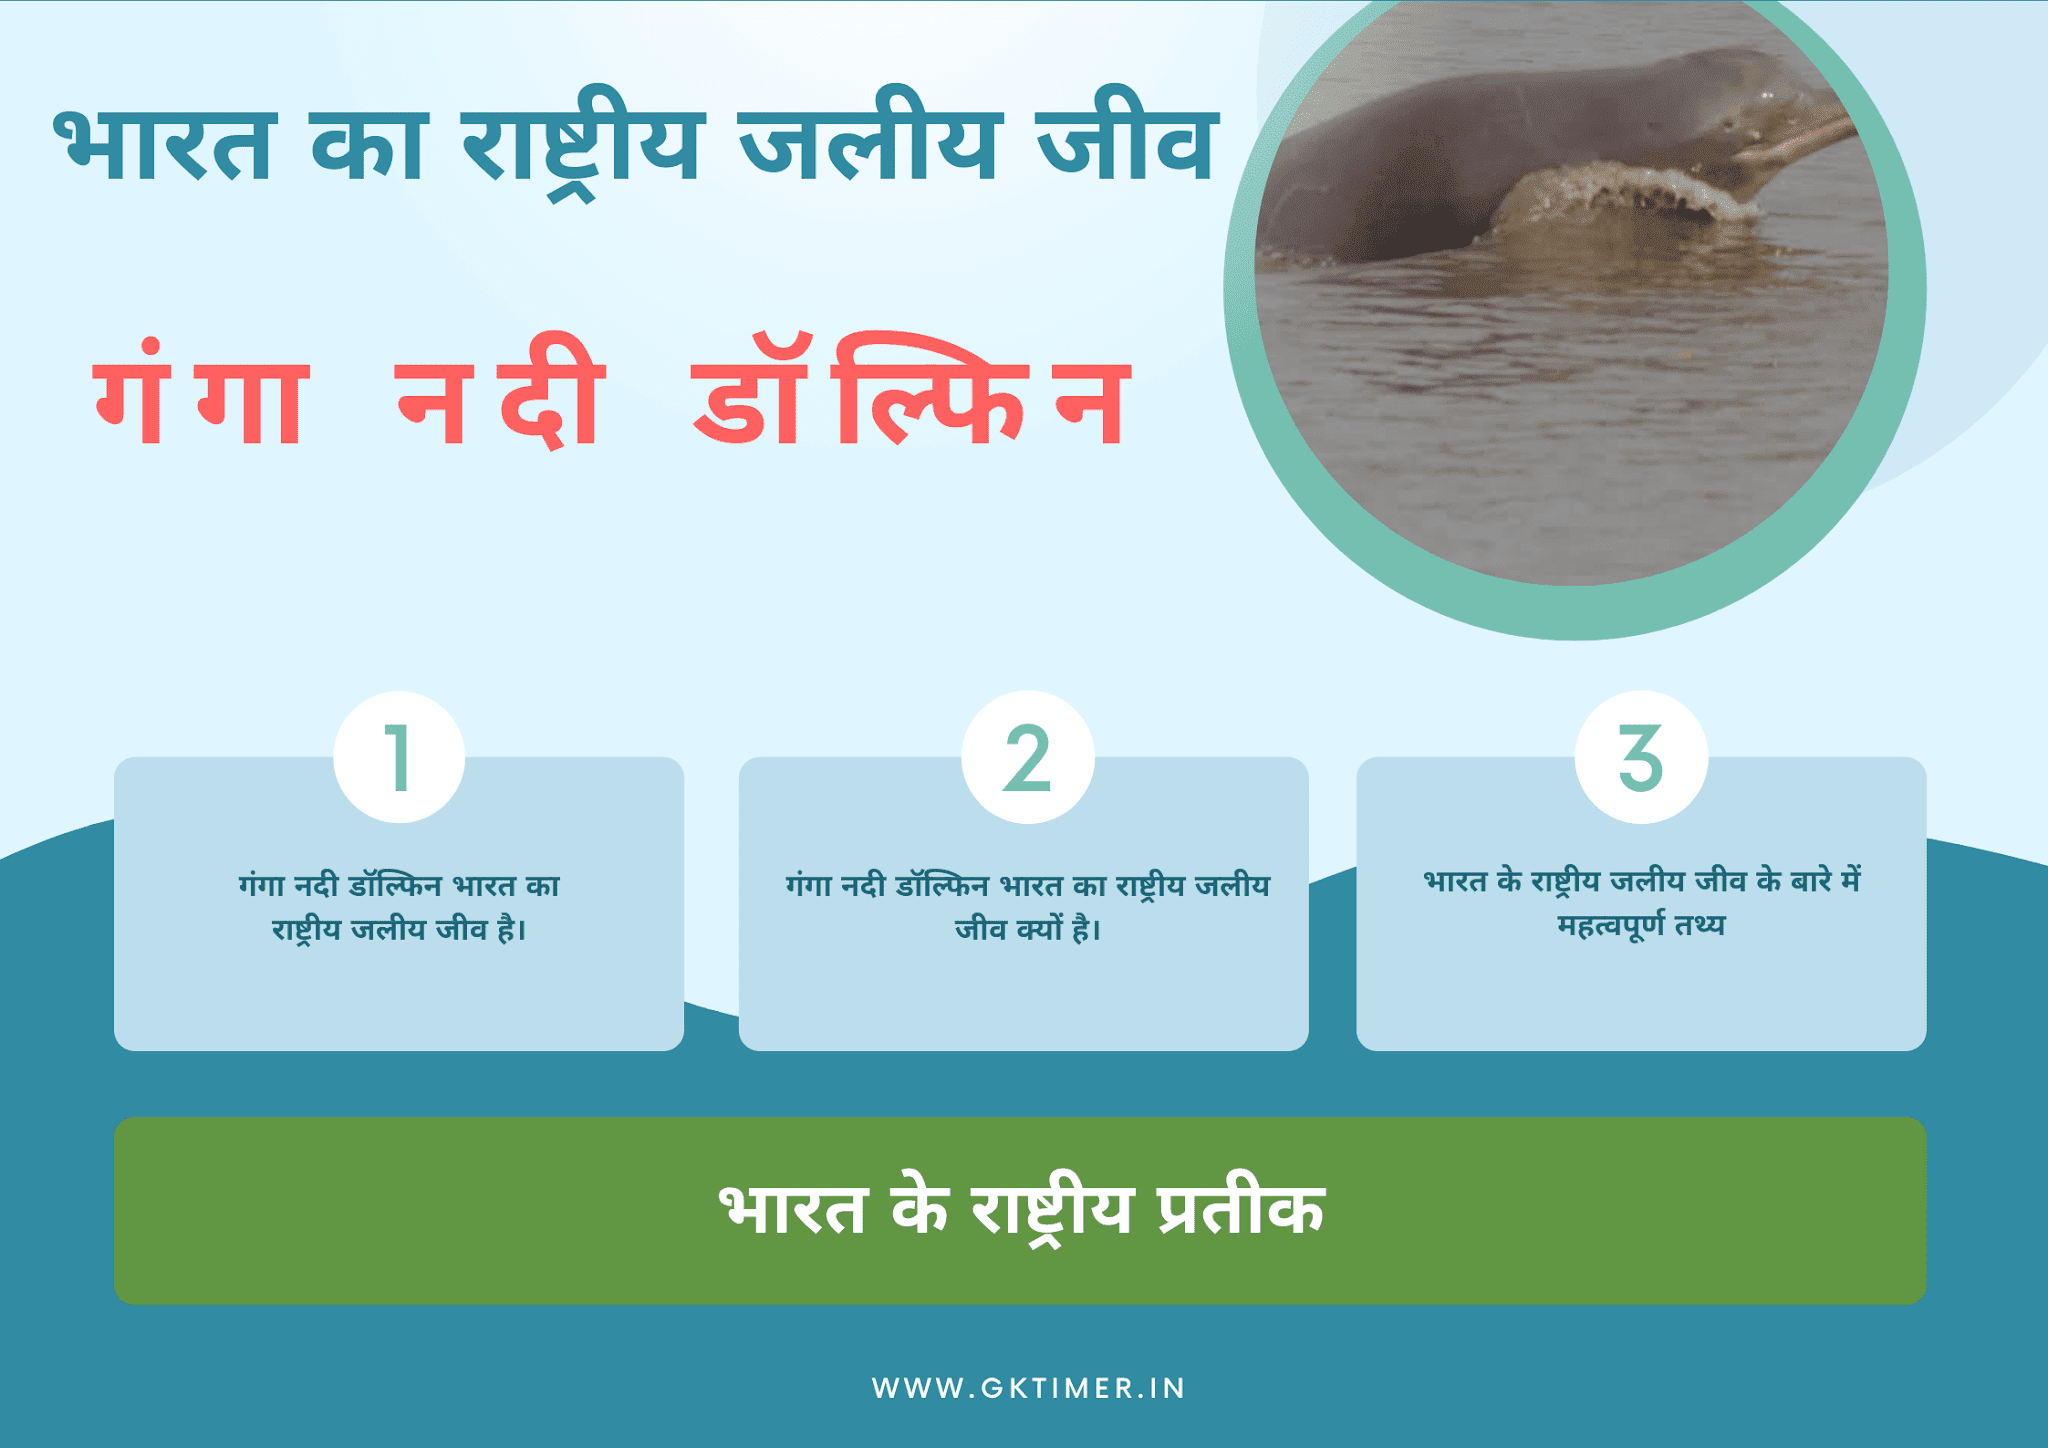 राष्ट्रीय जलीय जीव : गंगा नदी डॉल्फिन |National Aquatic Animal of India in Hindi : Ganges River Dolphin